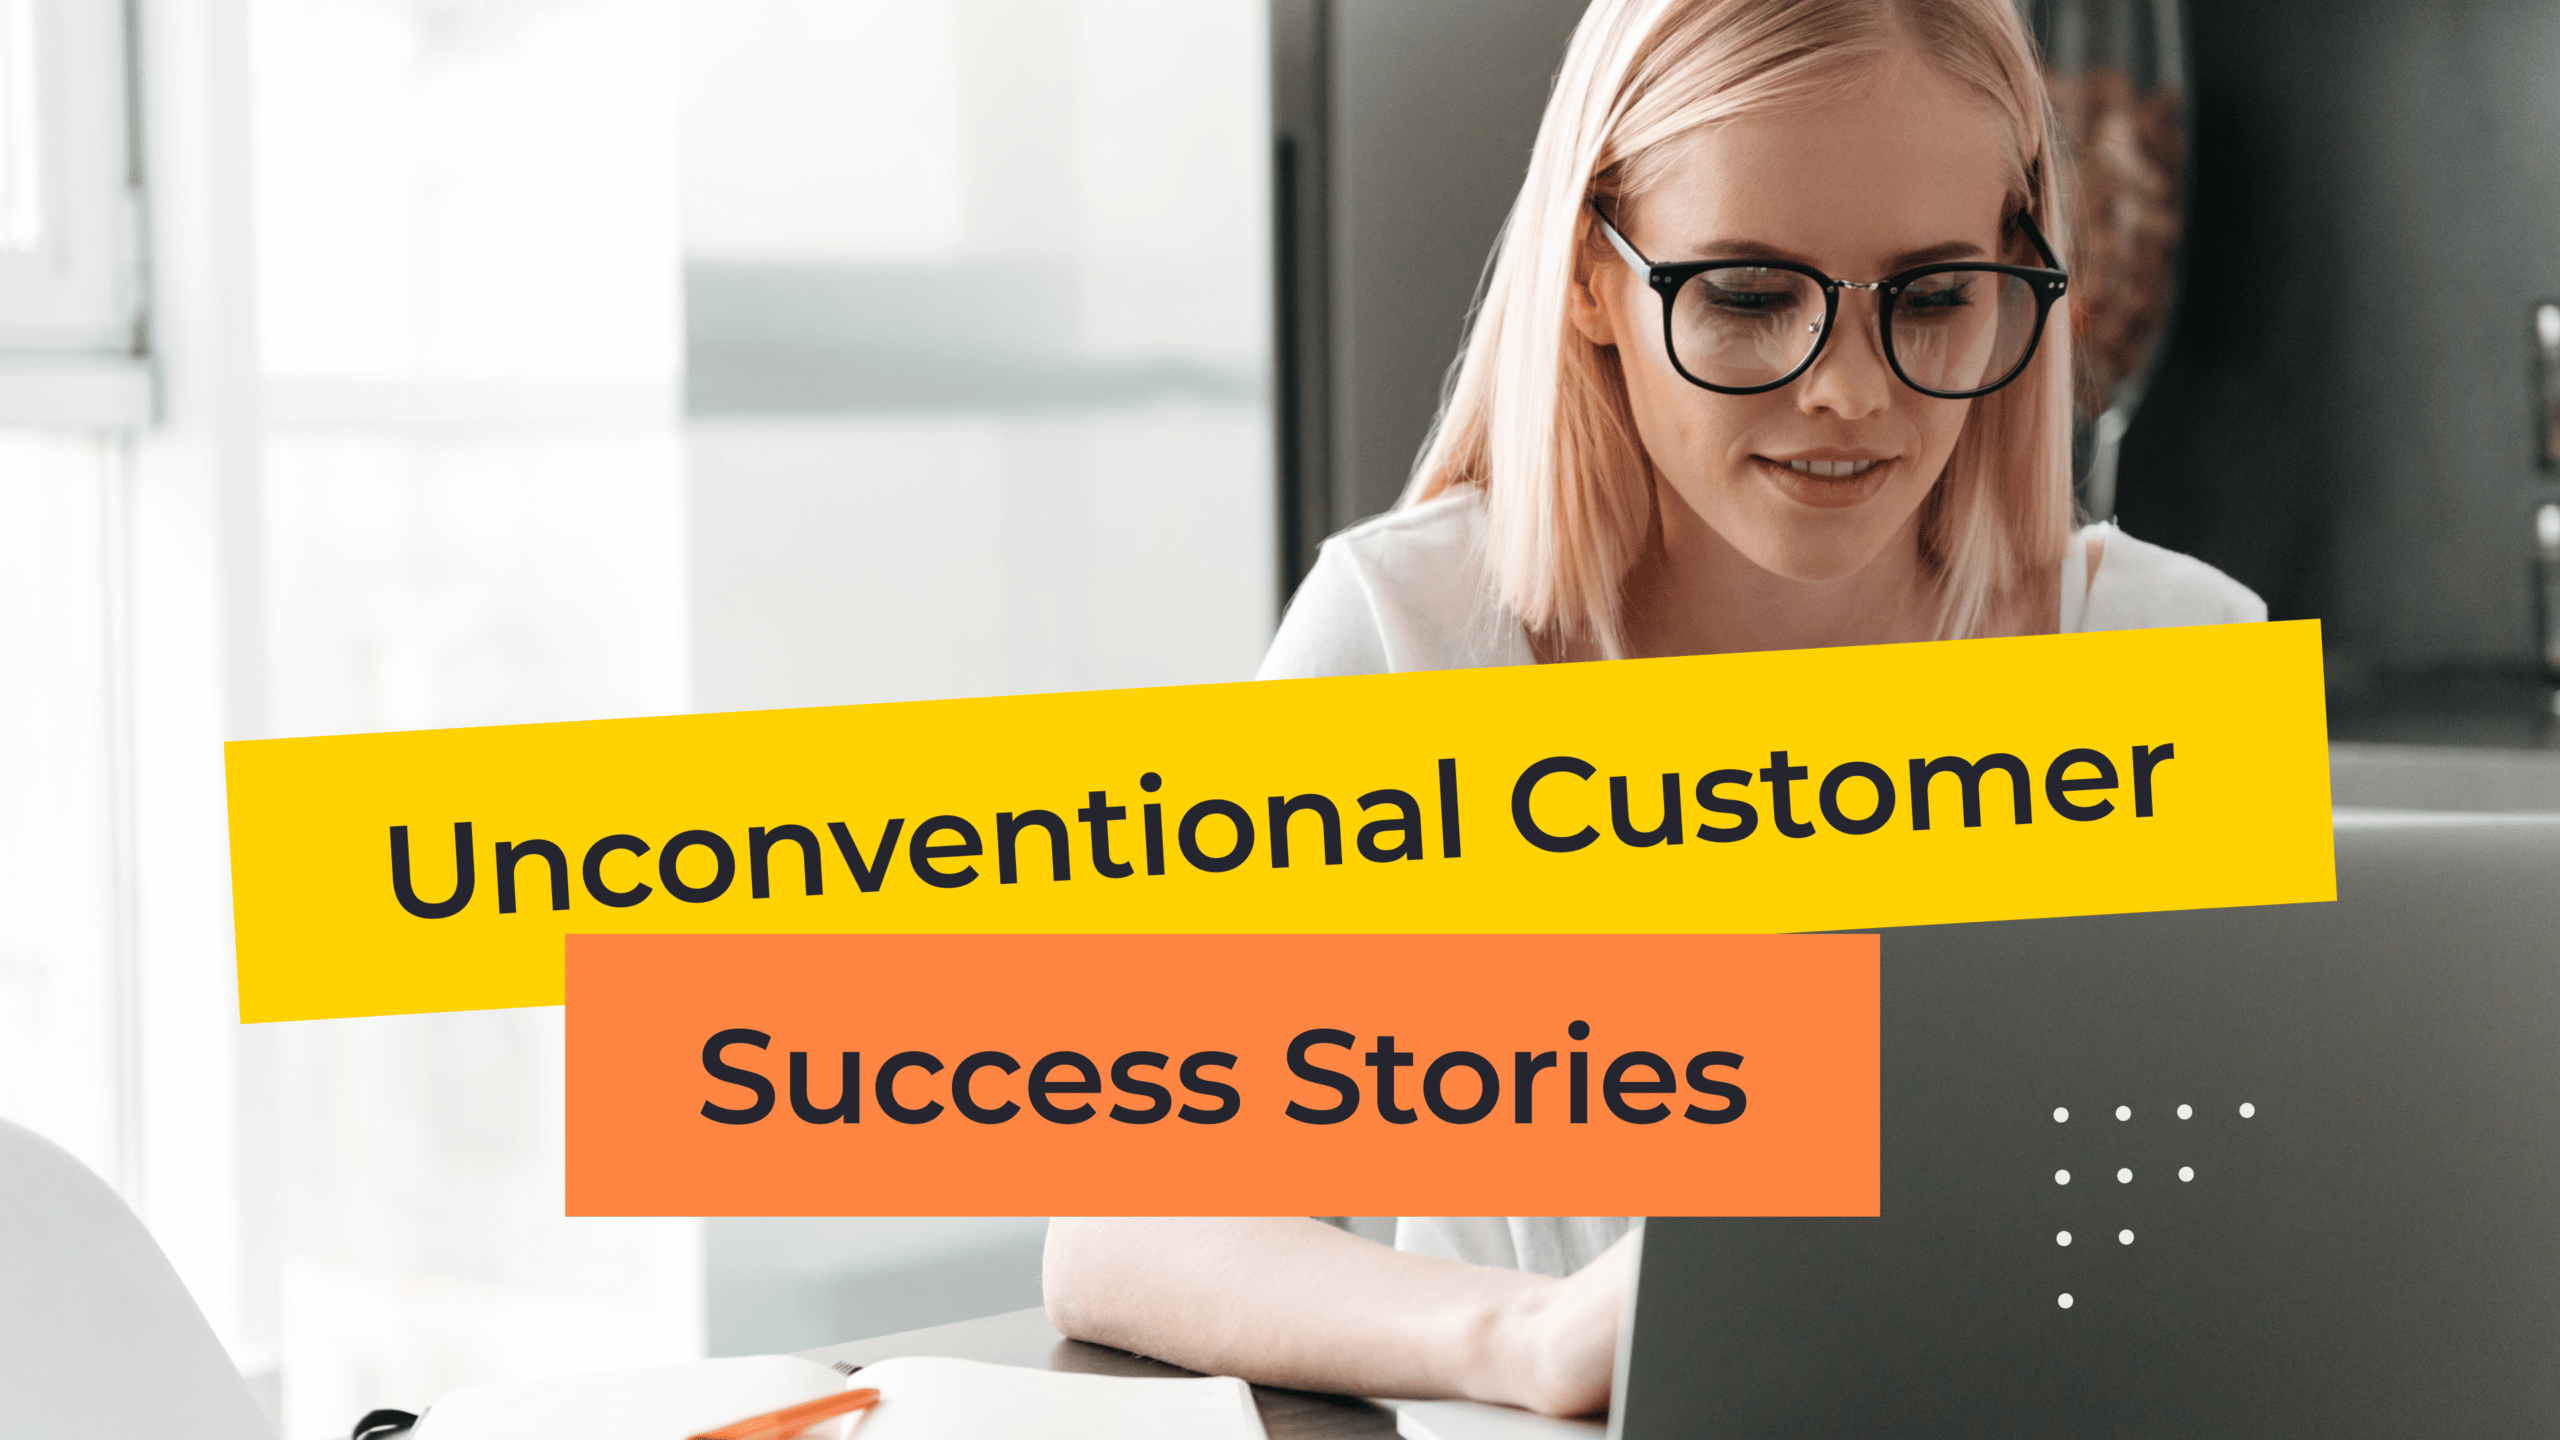 6 Inspiring Customer Success Stories of Focus, Loyalty, and Teamwork